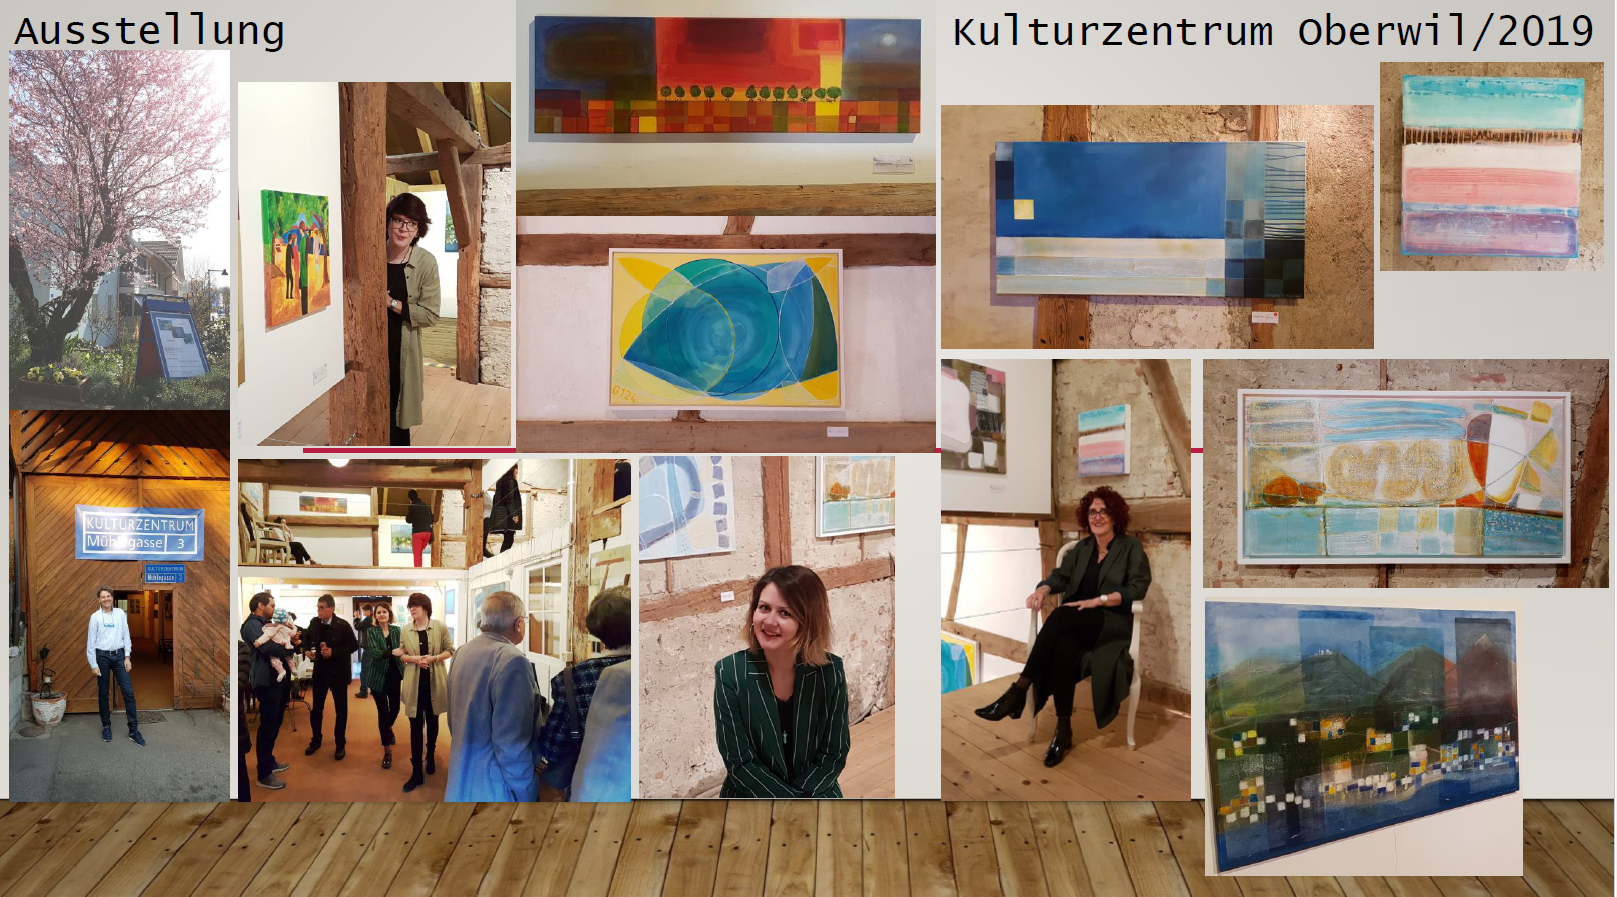 Ausstellung Kulturzentrum Oberwil